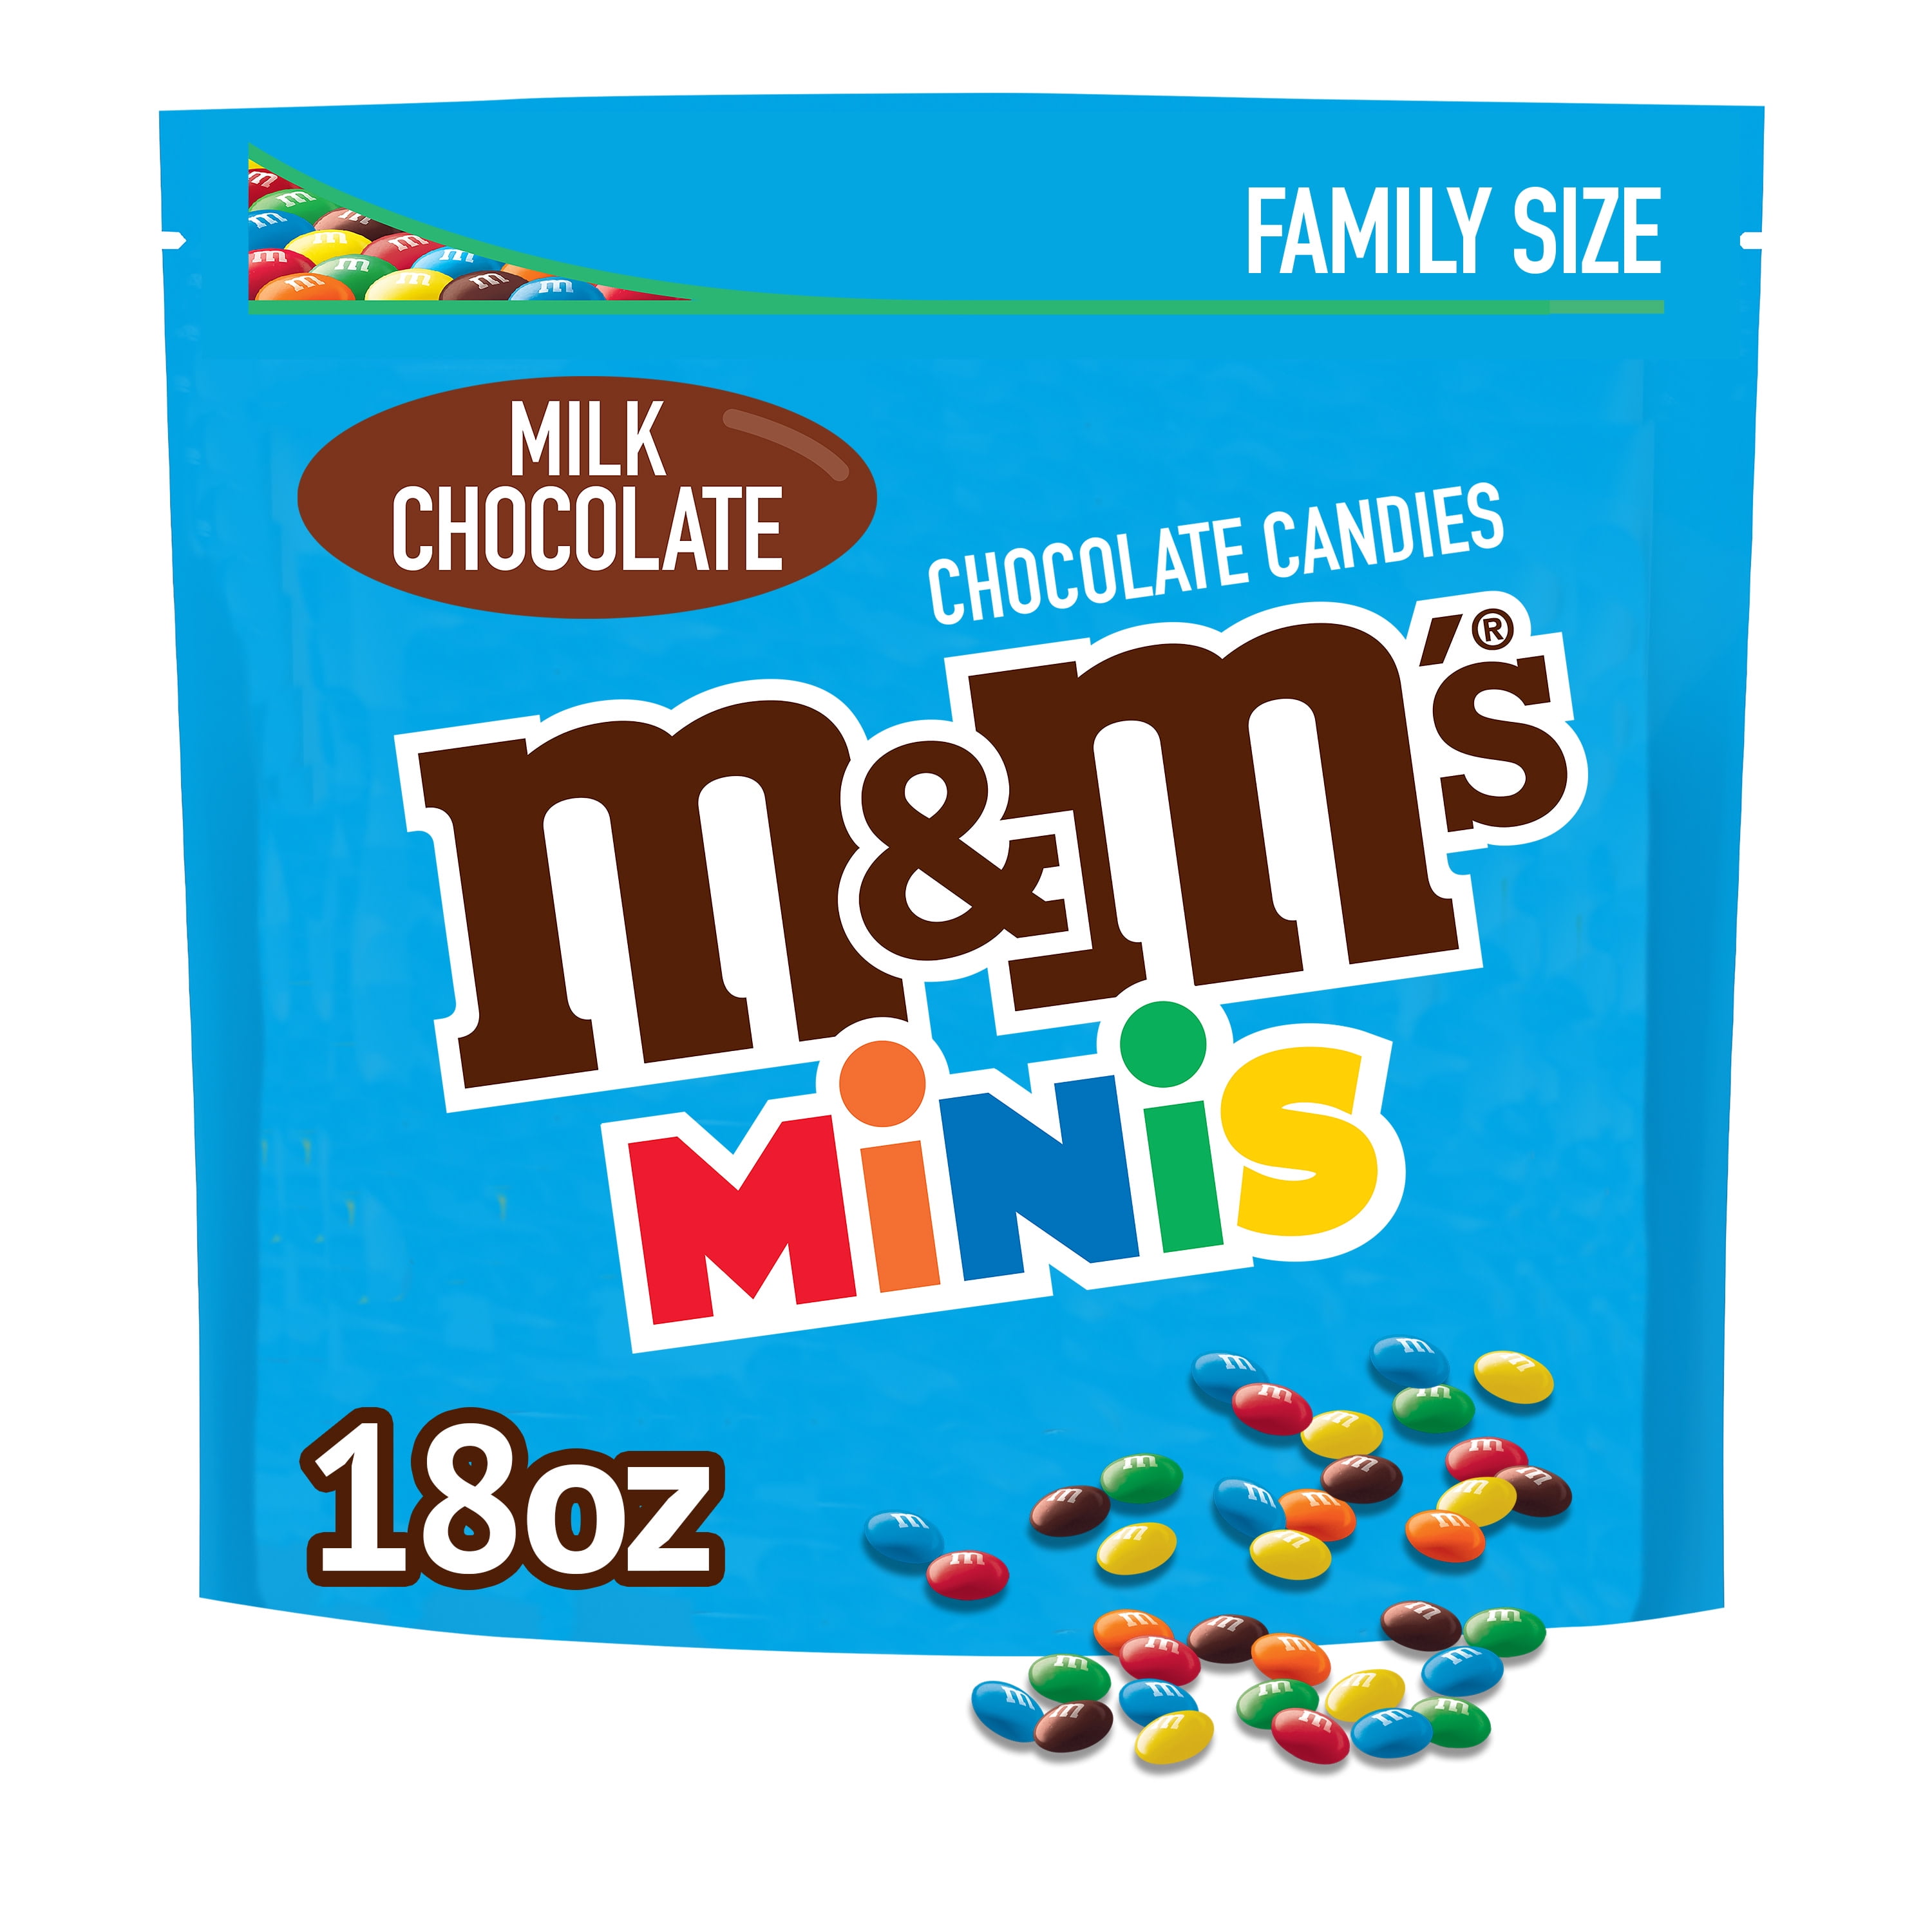 M&M'S Crispy Mint & Minis Milk Chocolate Candy Bar, 3.8-Ounce Bar 